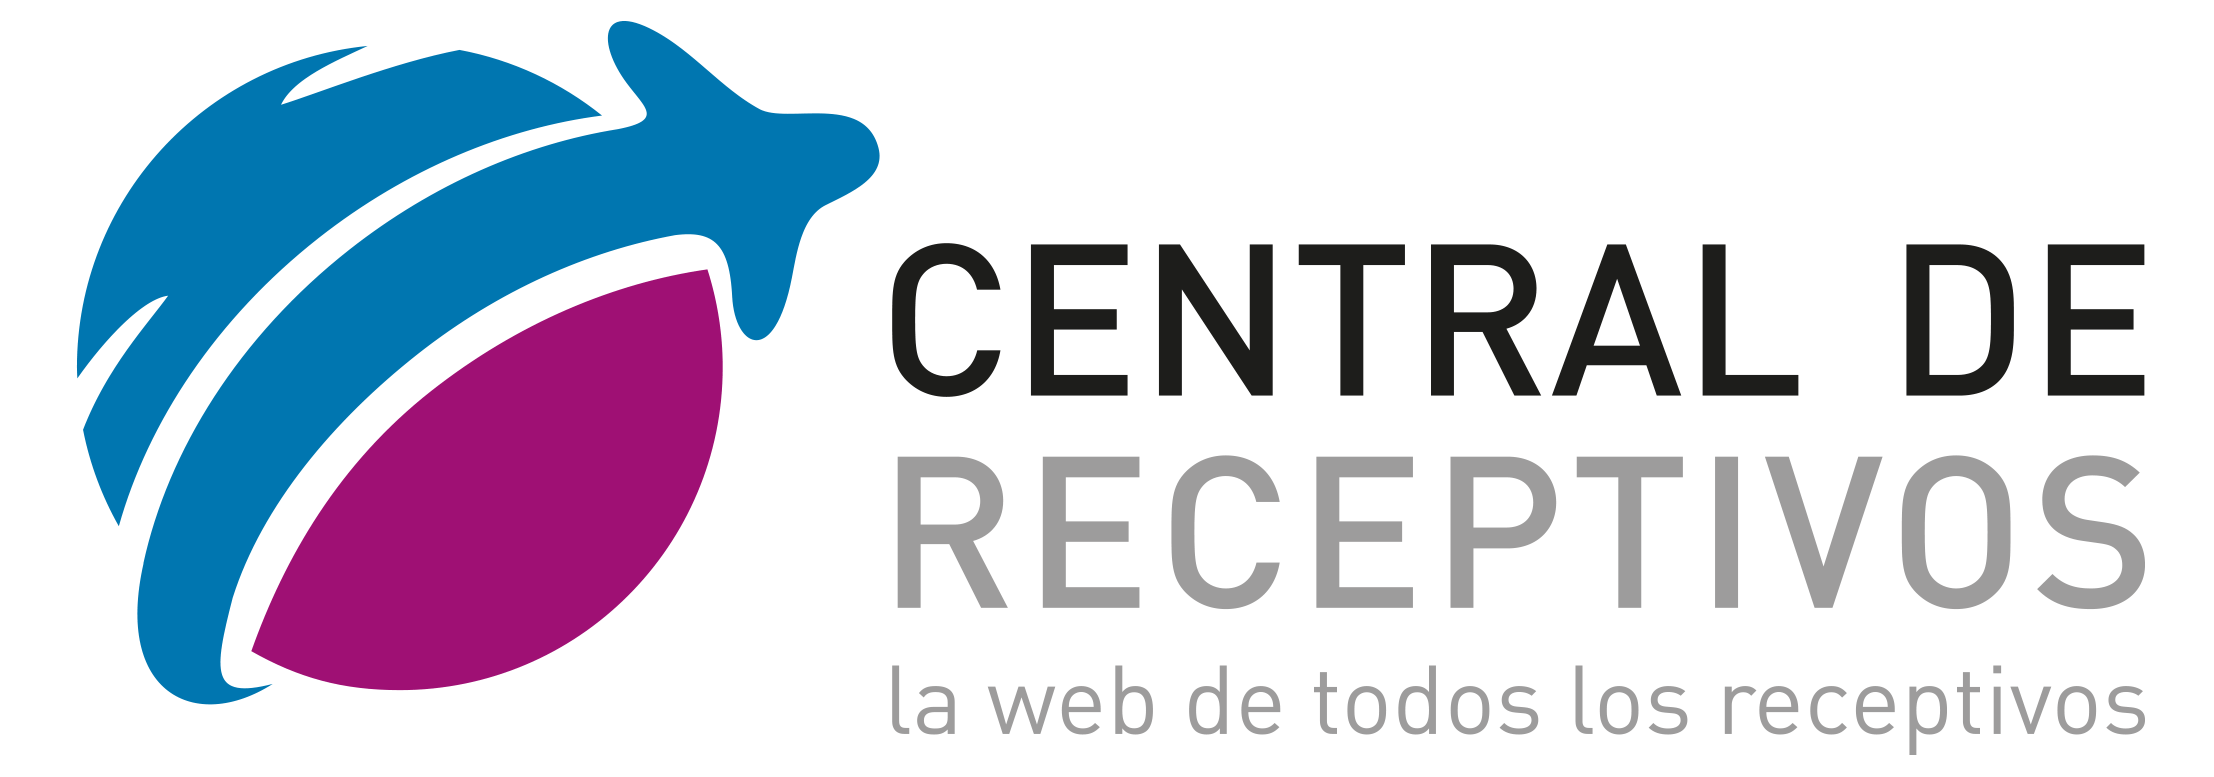 CENTRAL DE RECEPTIVOS